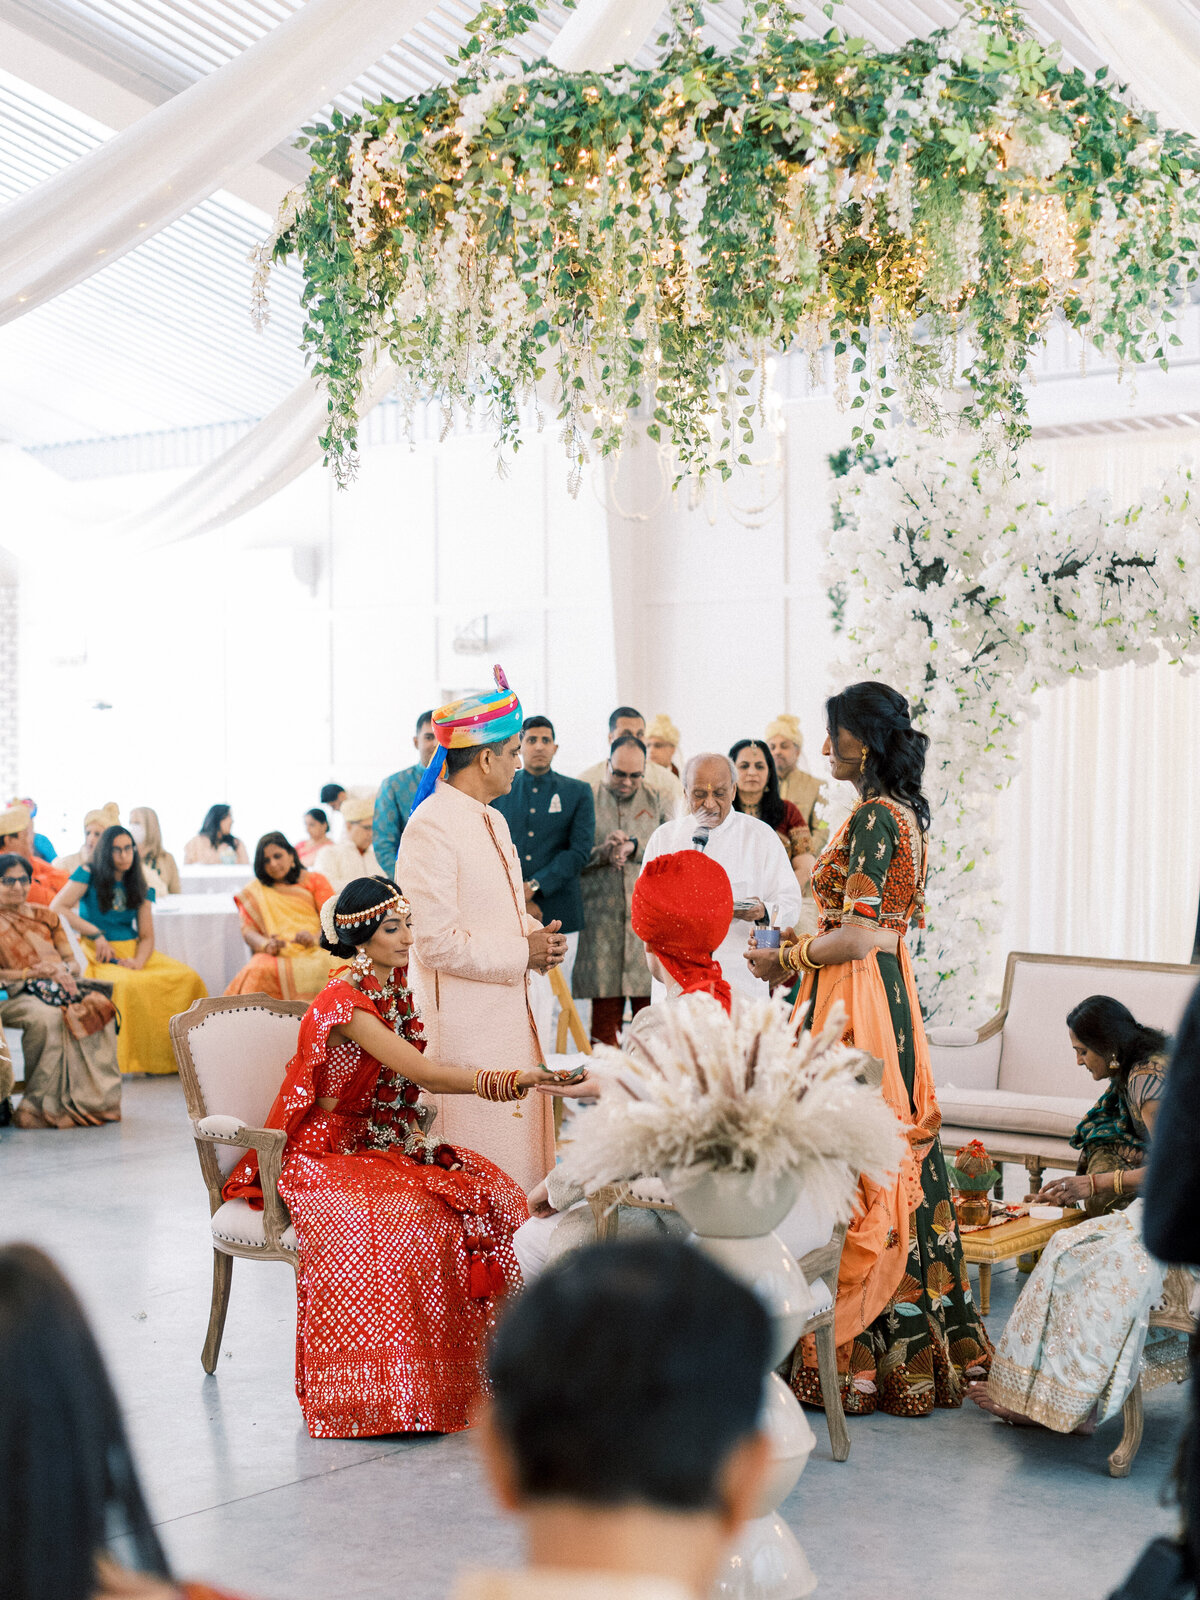 Prianka + Alex - Hindu Wedding 10 - Ceremony 4